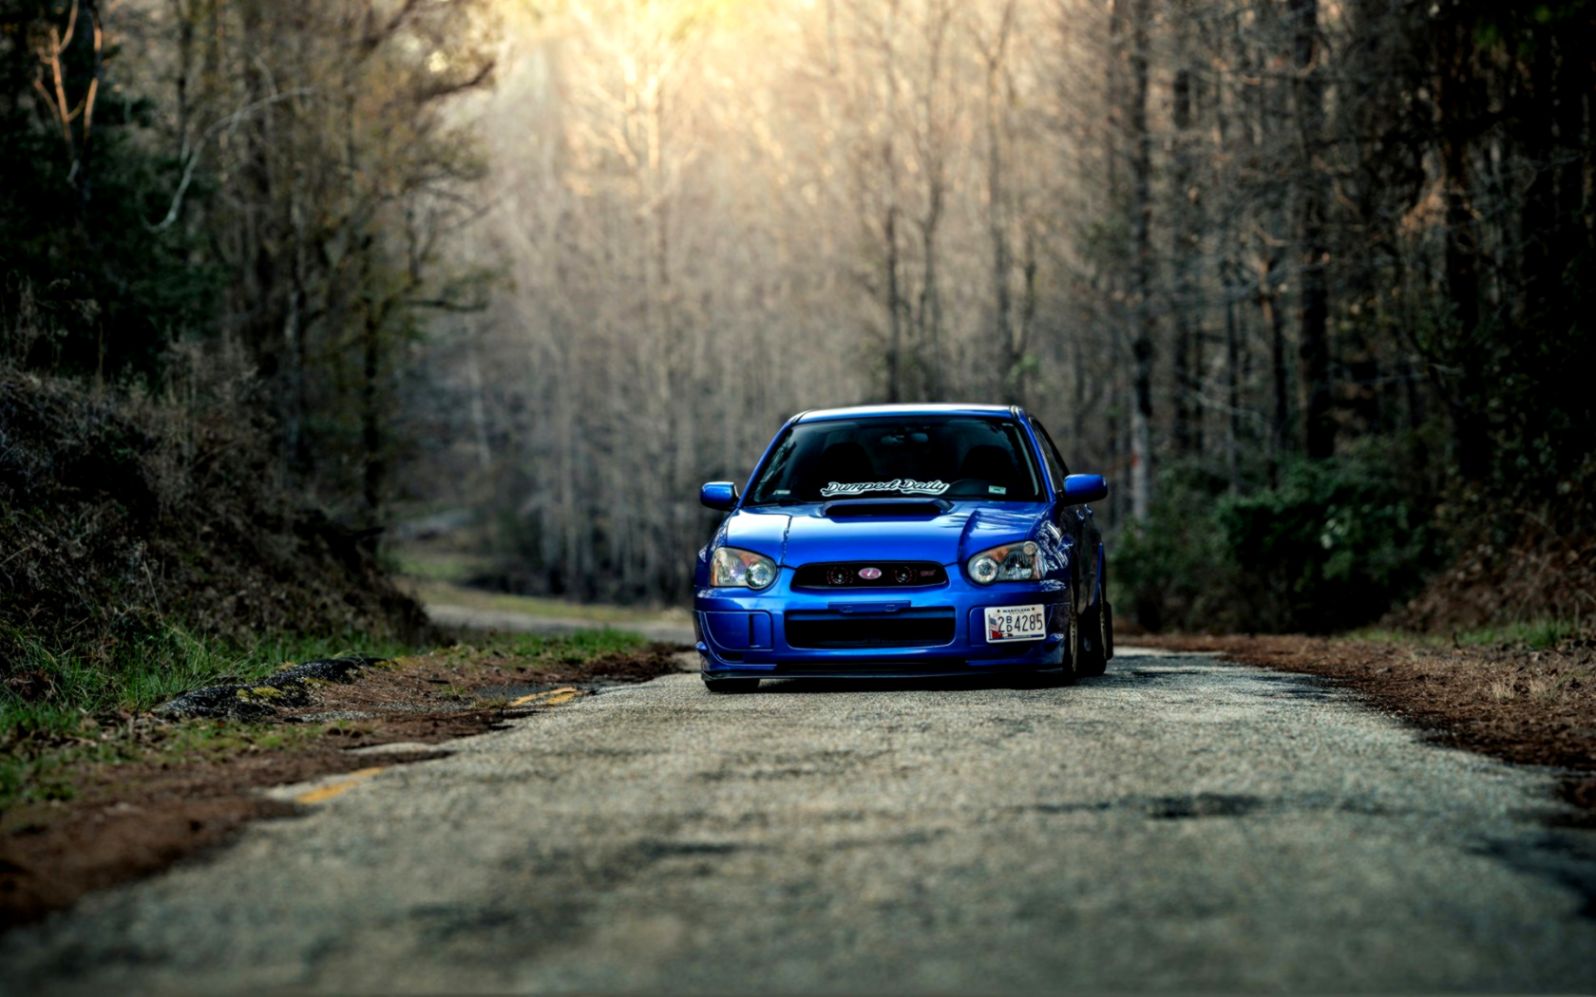 Subaru Impreza Wrx Sti Car Road Hd Wallpaper - Subaru Impreza Wrx Sti - HD Wallpaper 